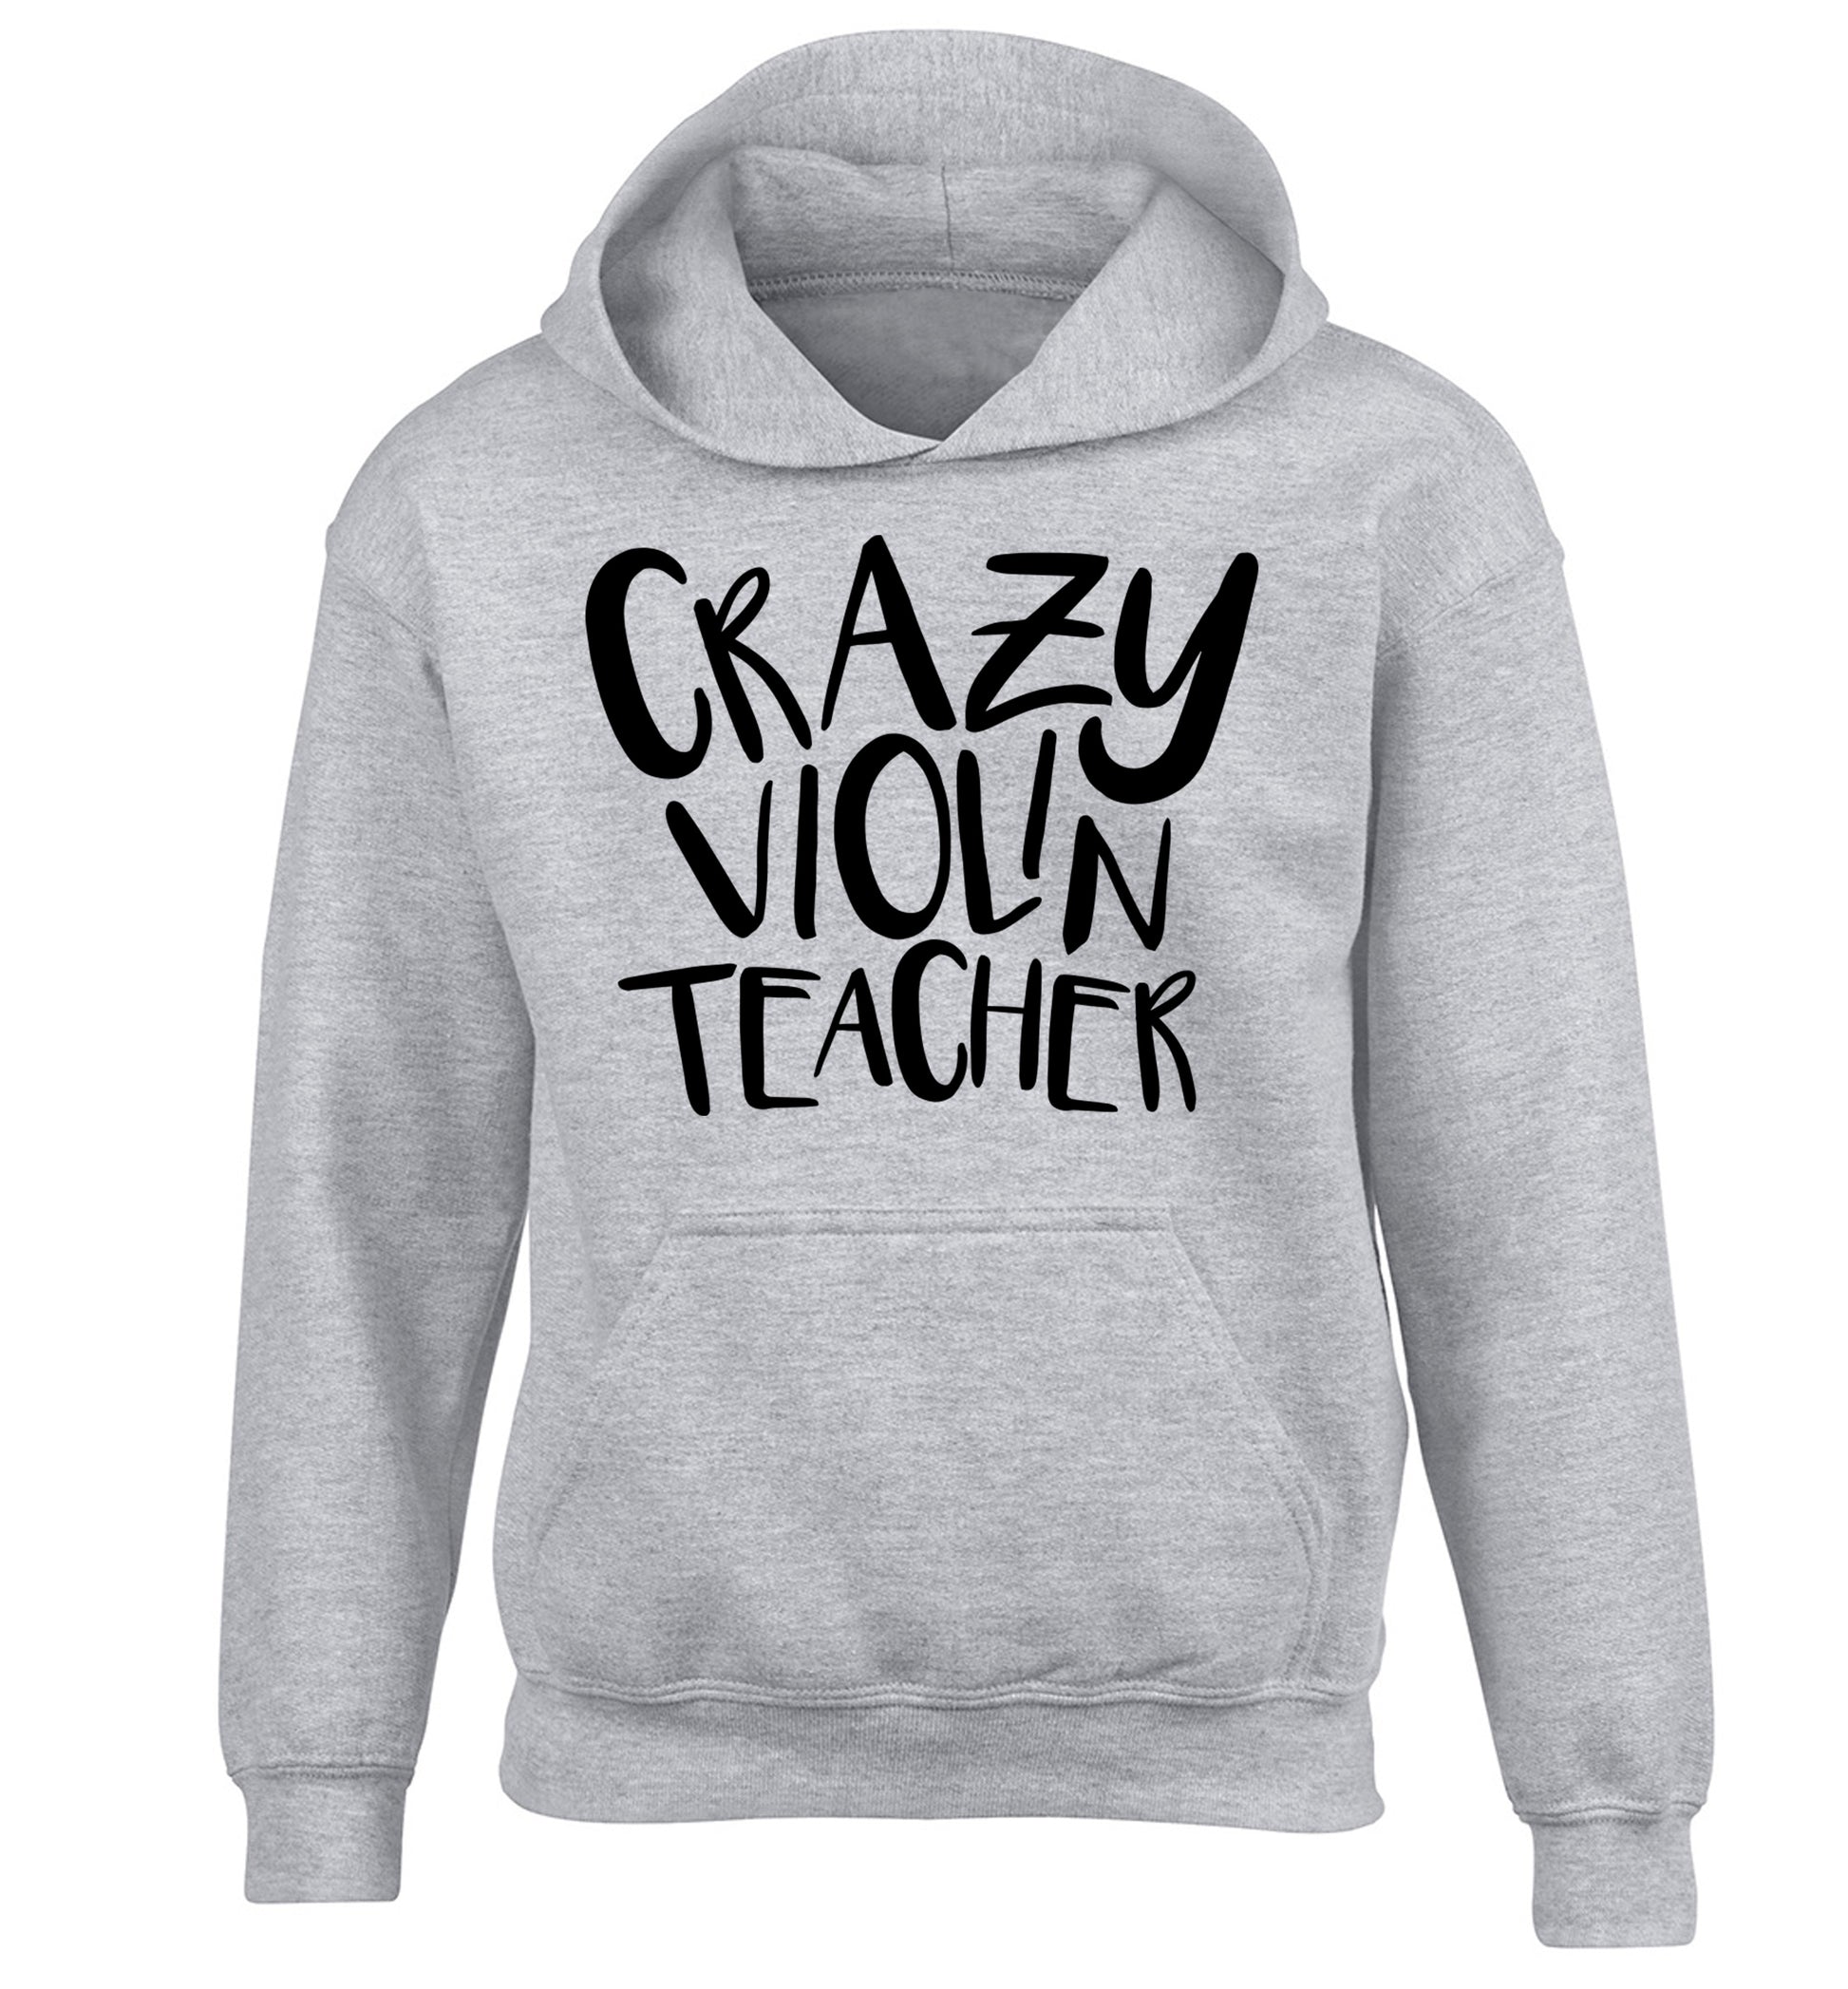 Crazy violin teacher children's grey hoodie 12-13 Years